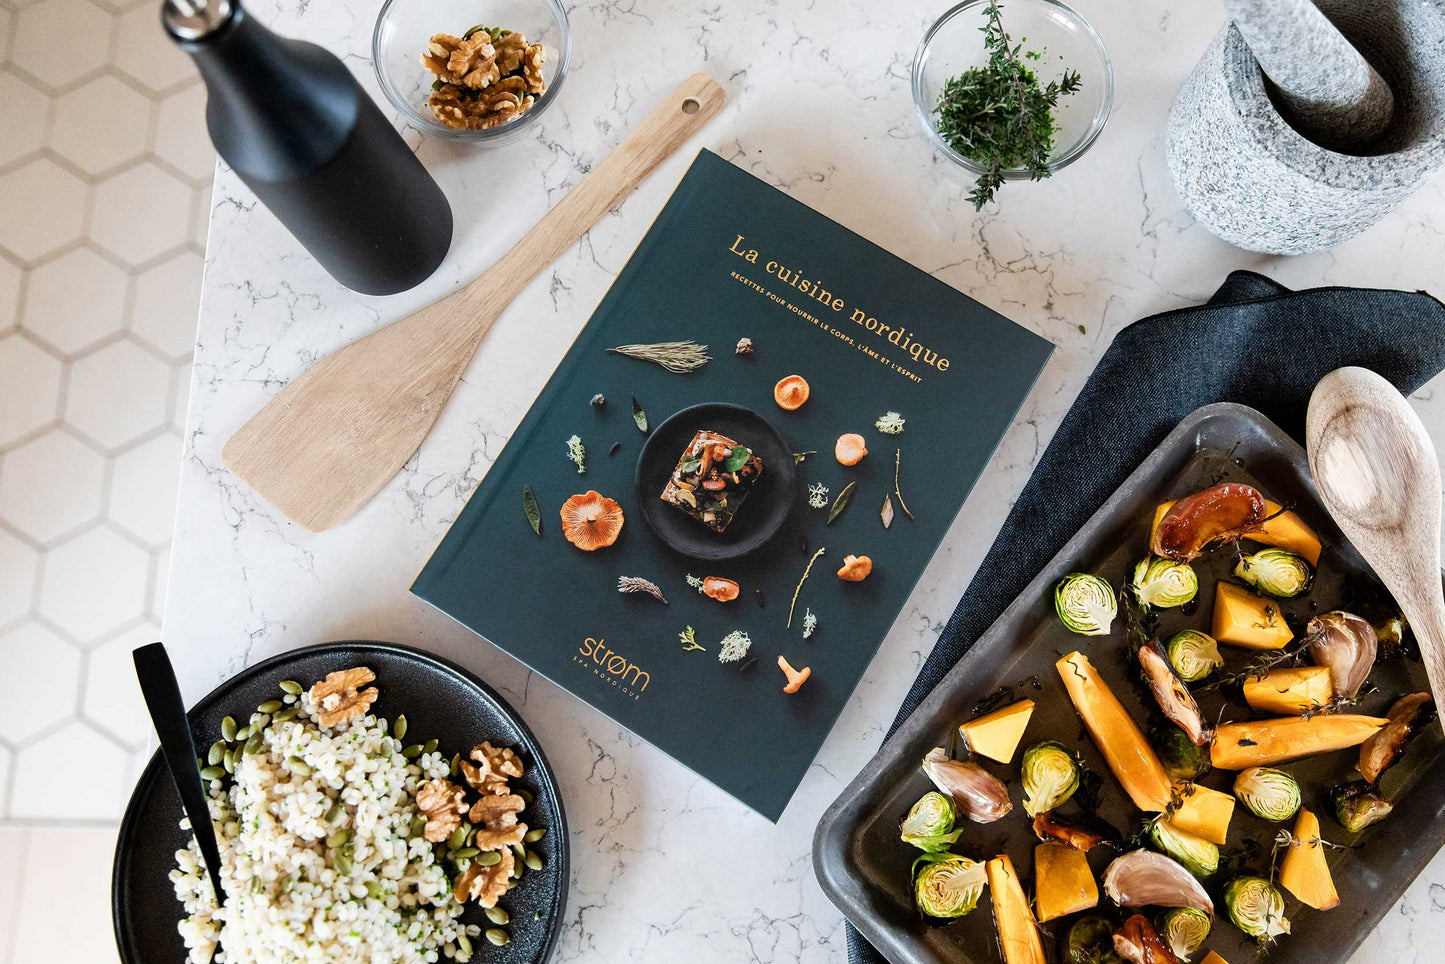 "La cuisine nordique" cookbook